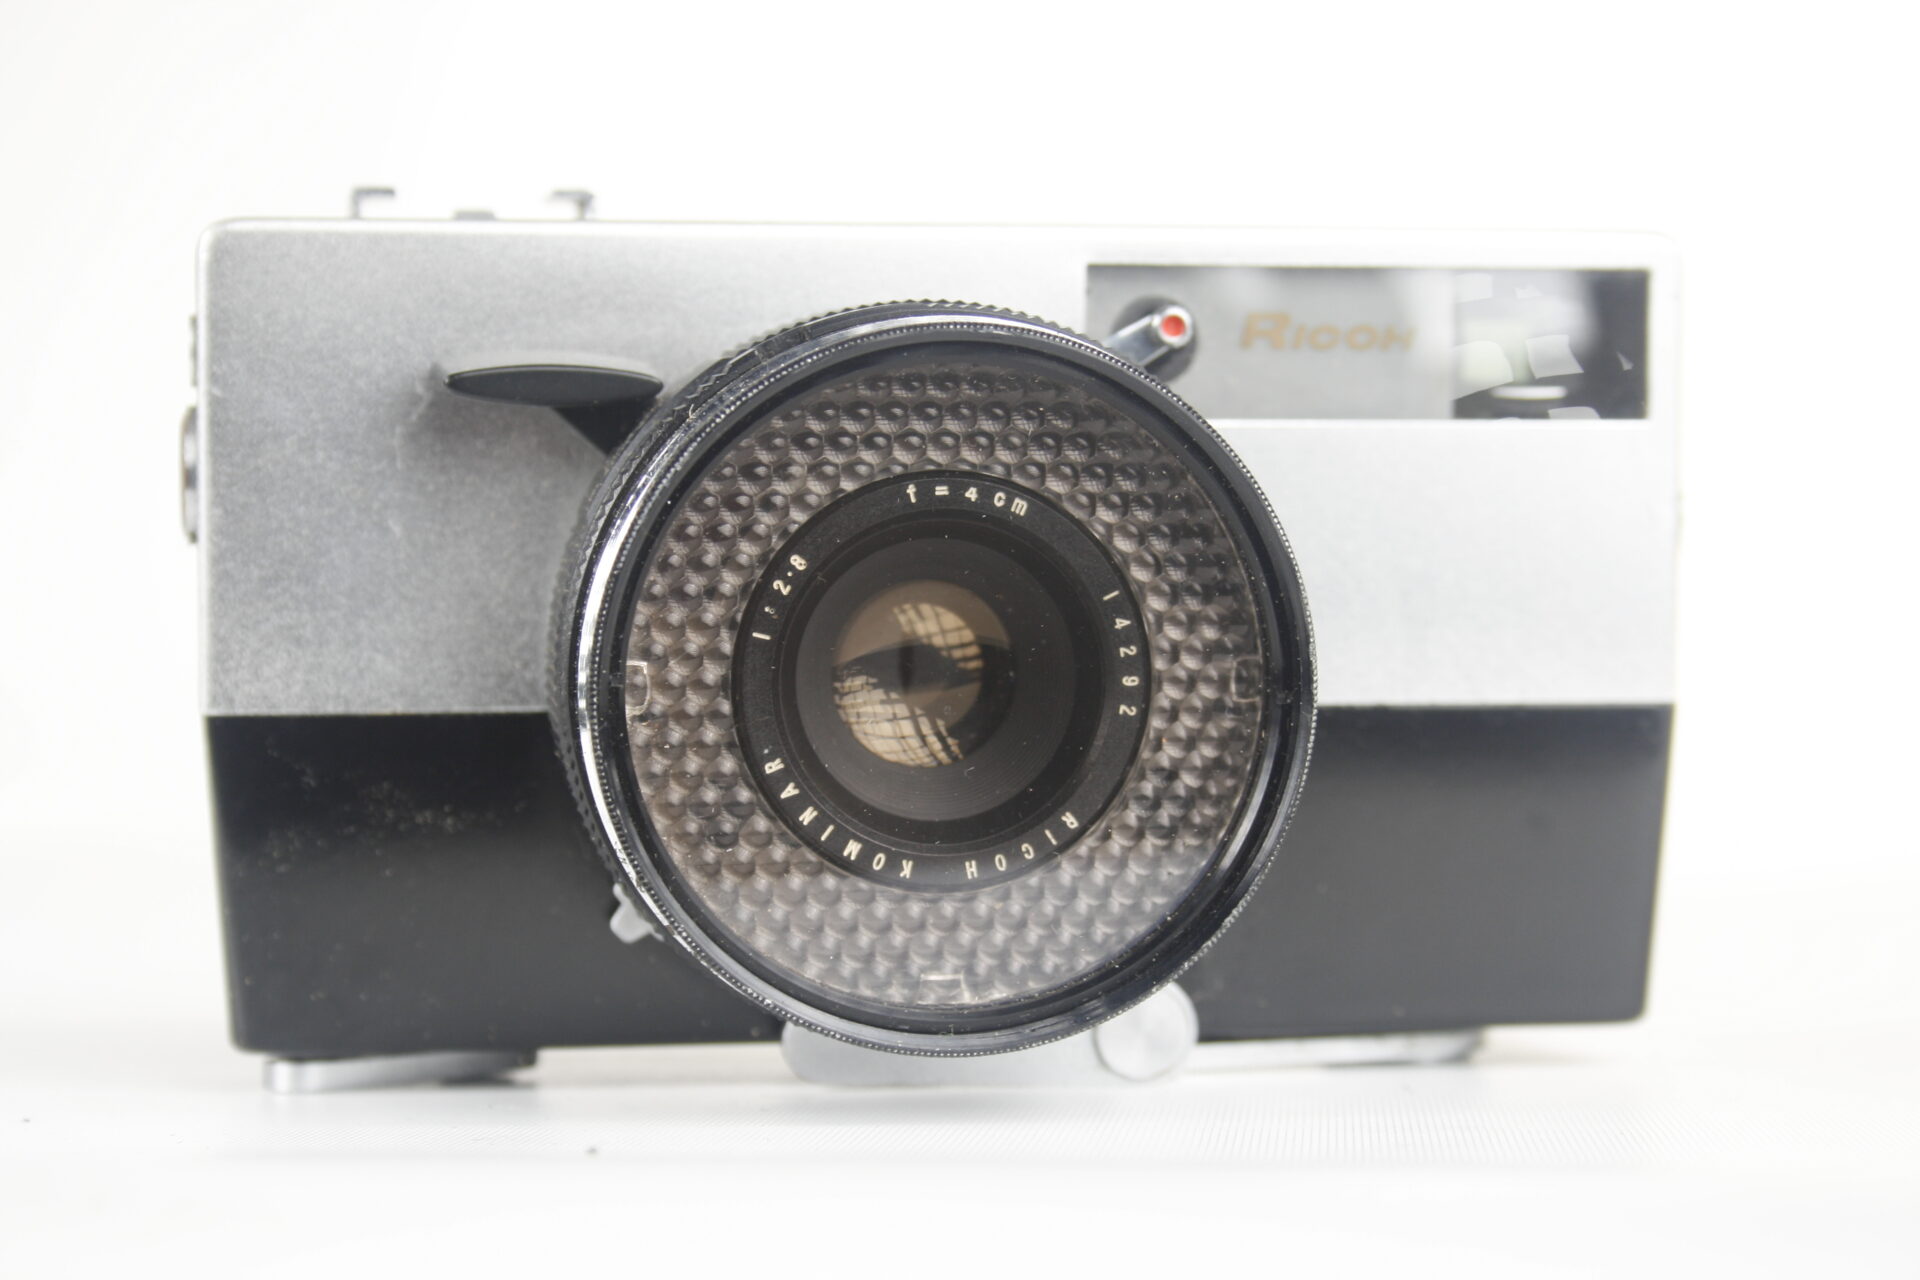 Ricoh Ricohmatic 35. 35mm rangefinder camera. 1960-1970. Japan.